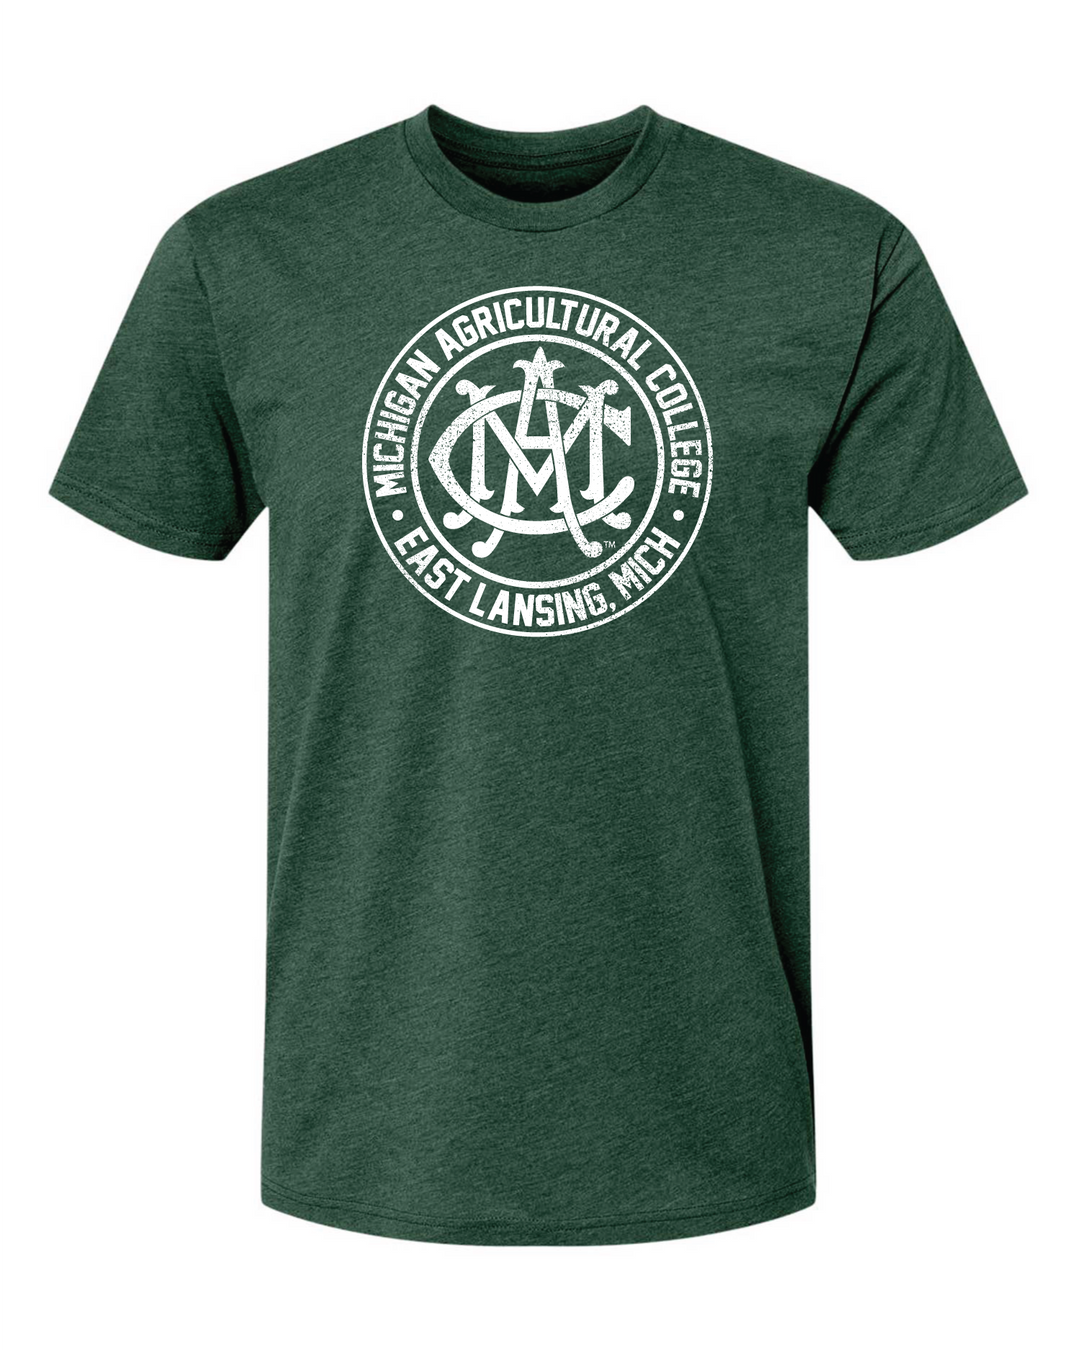 Michigan State University vintage MAC Michigan Agricultural College Green T-Shirt